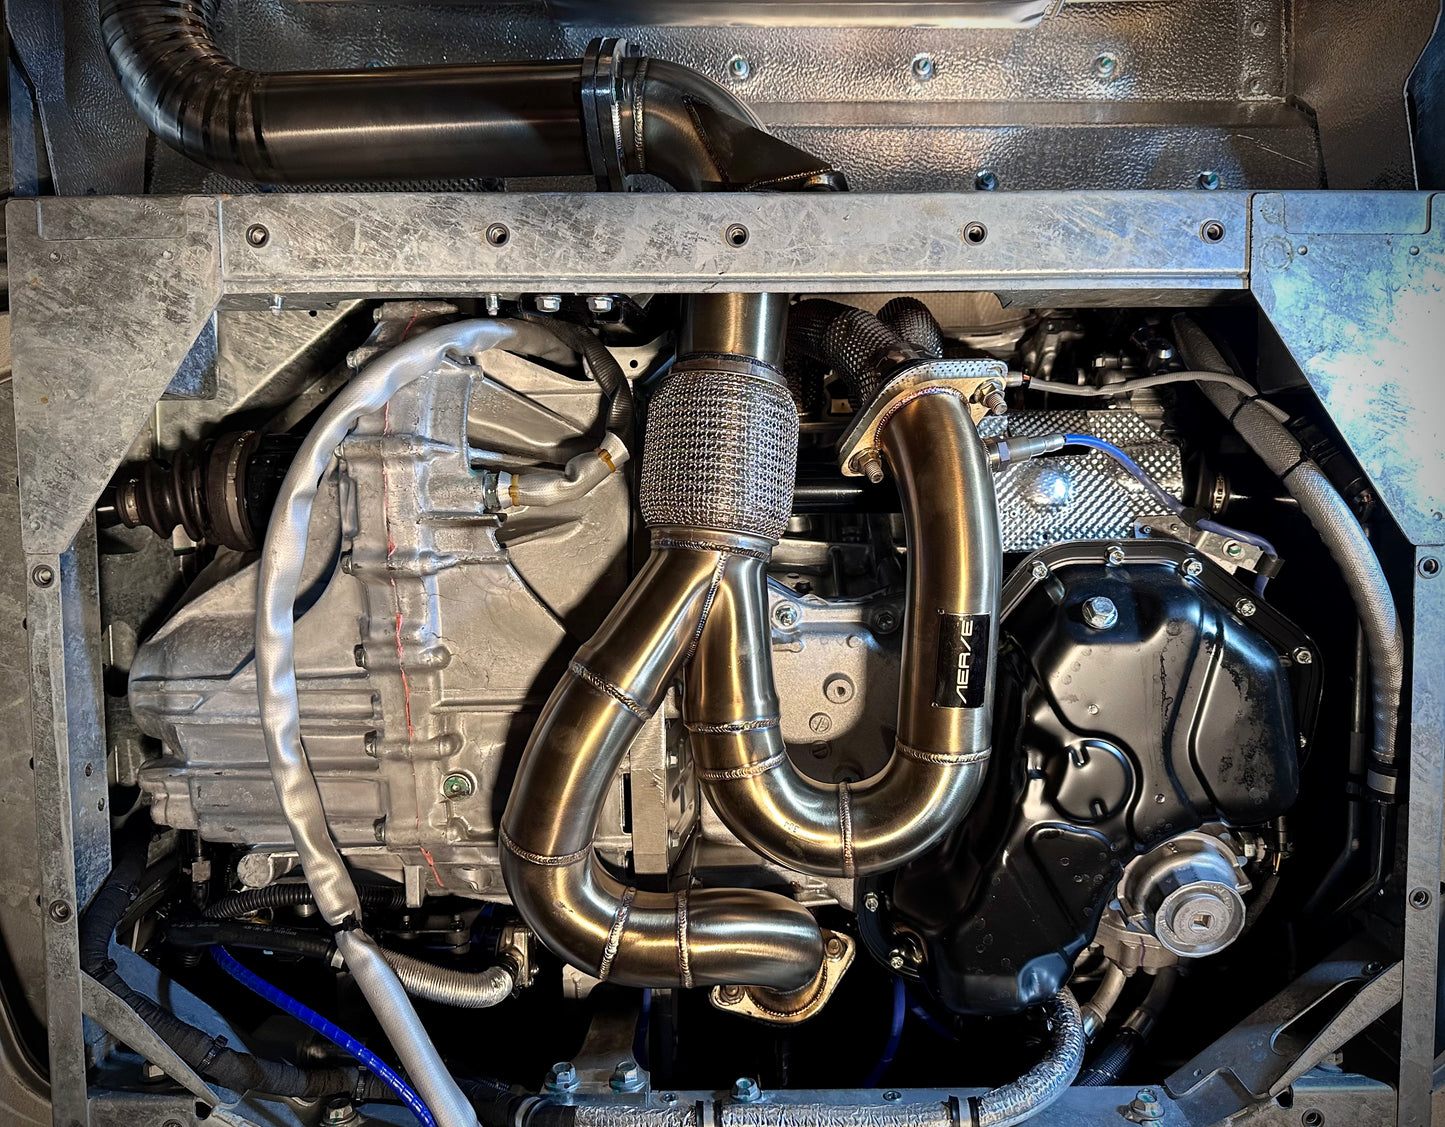 Emira V6 Titanium exhaust system by Aerie Performance